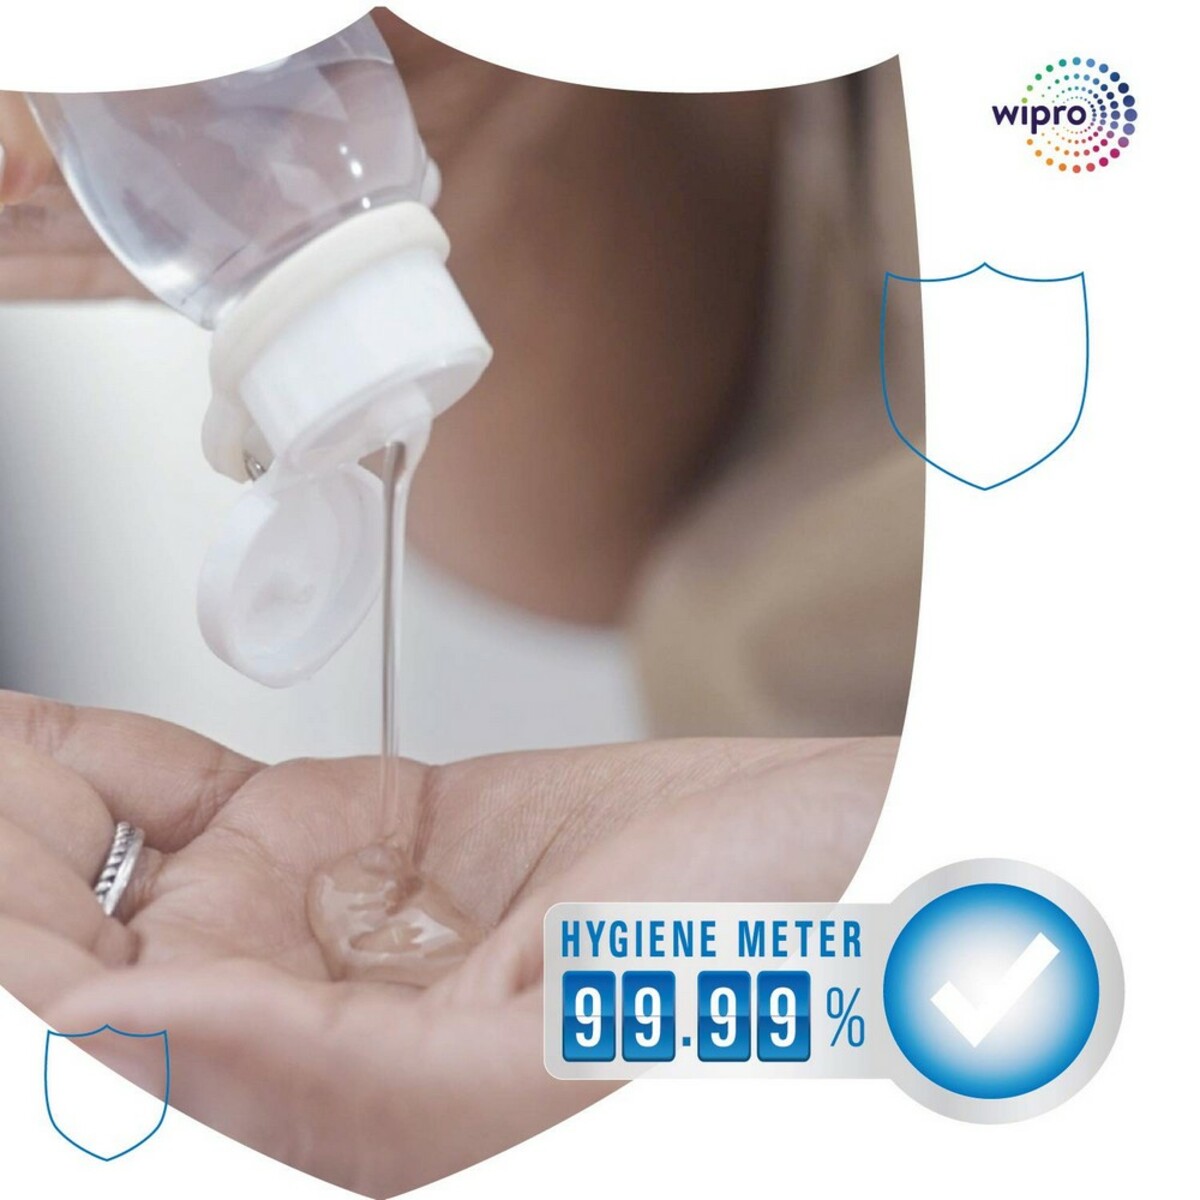 Hygienix Sanitizer 500ml